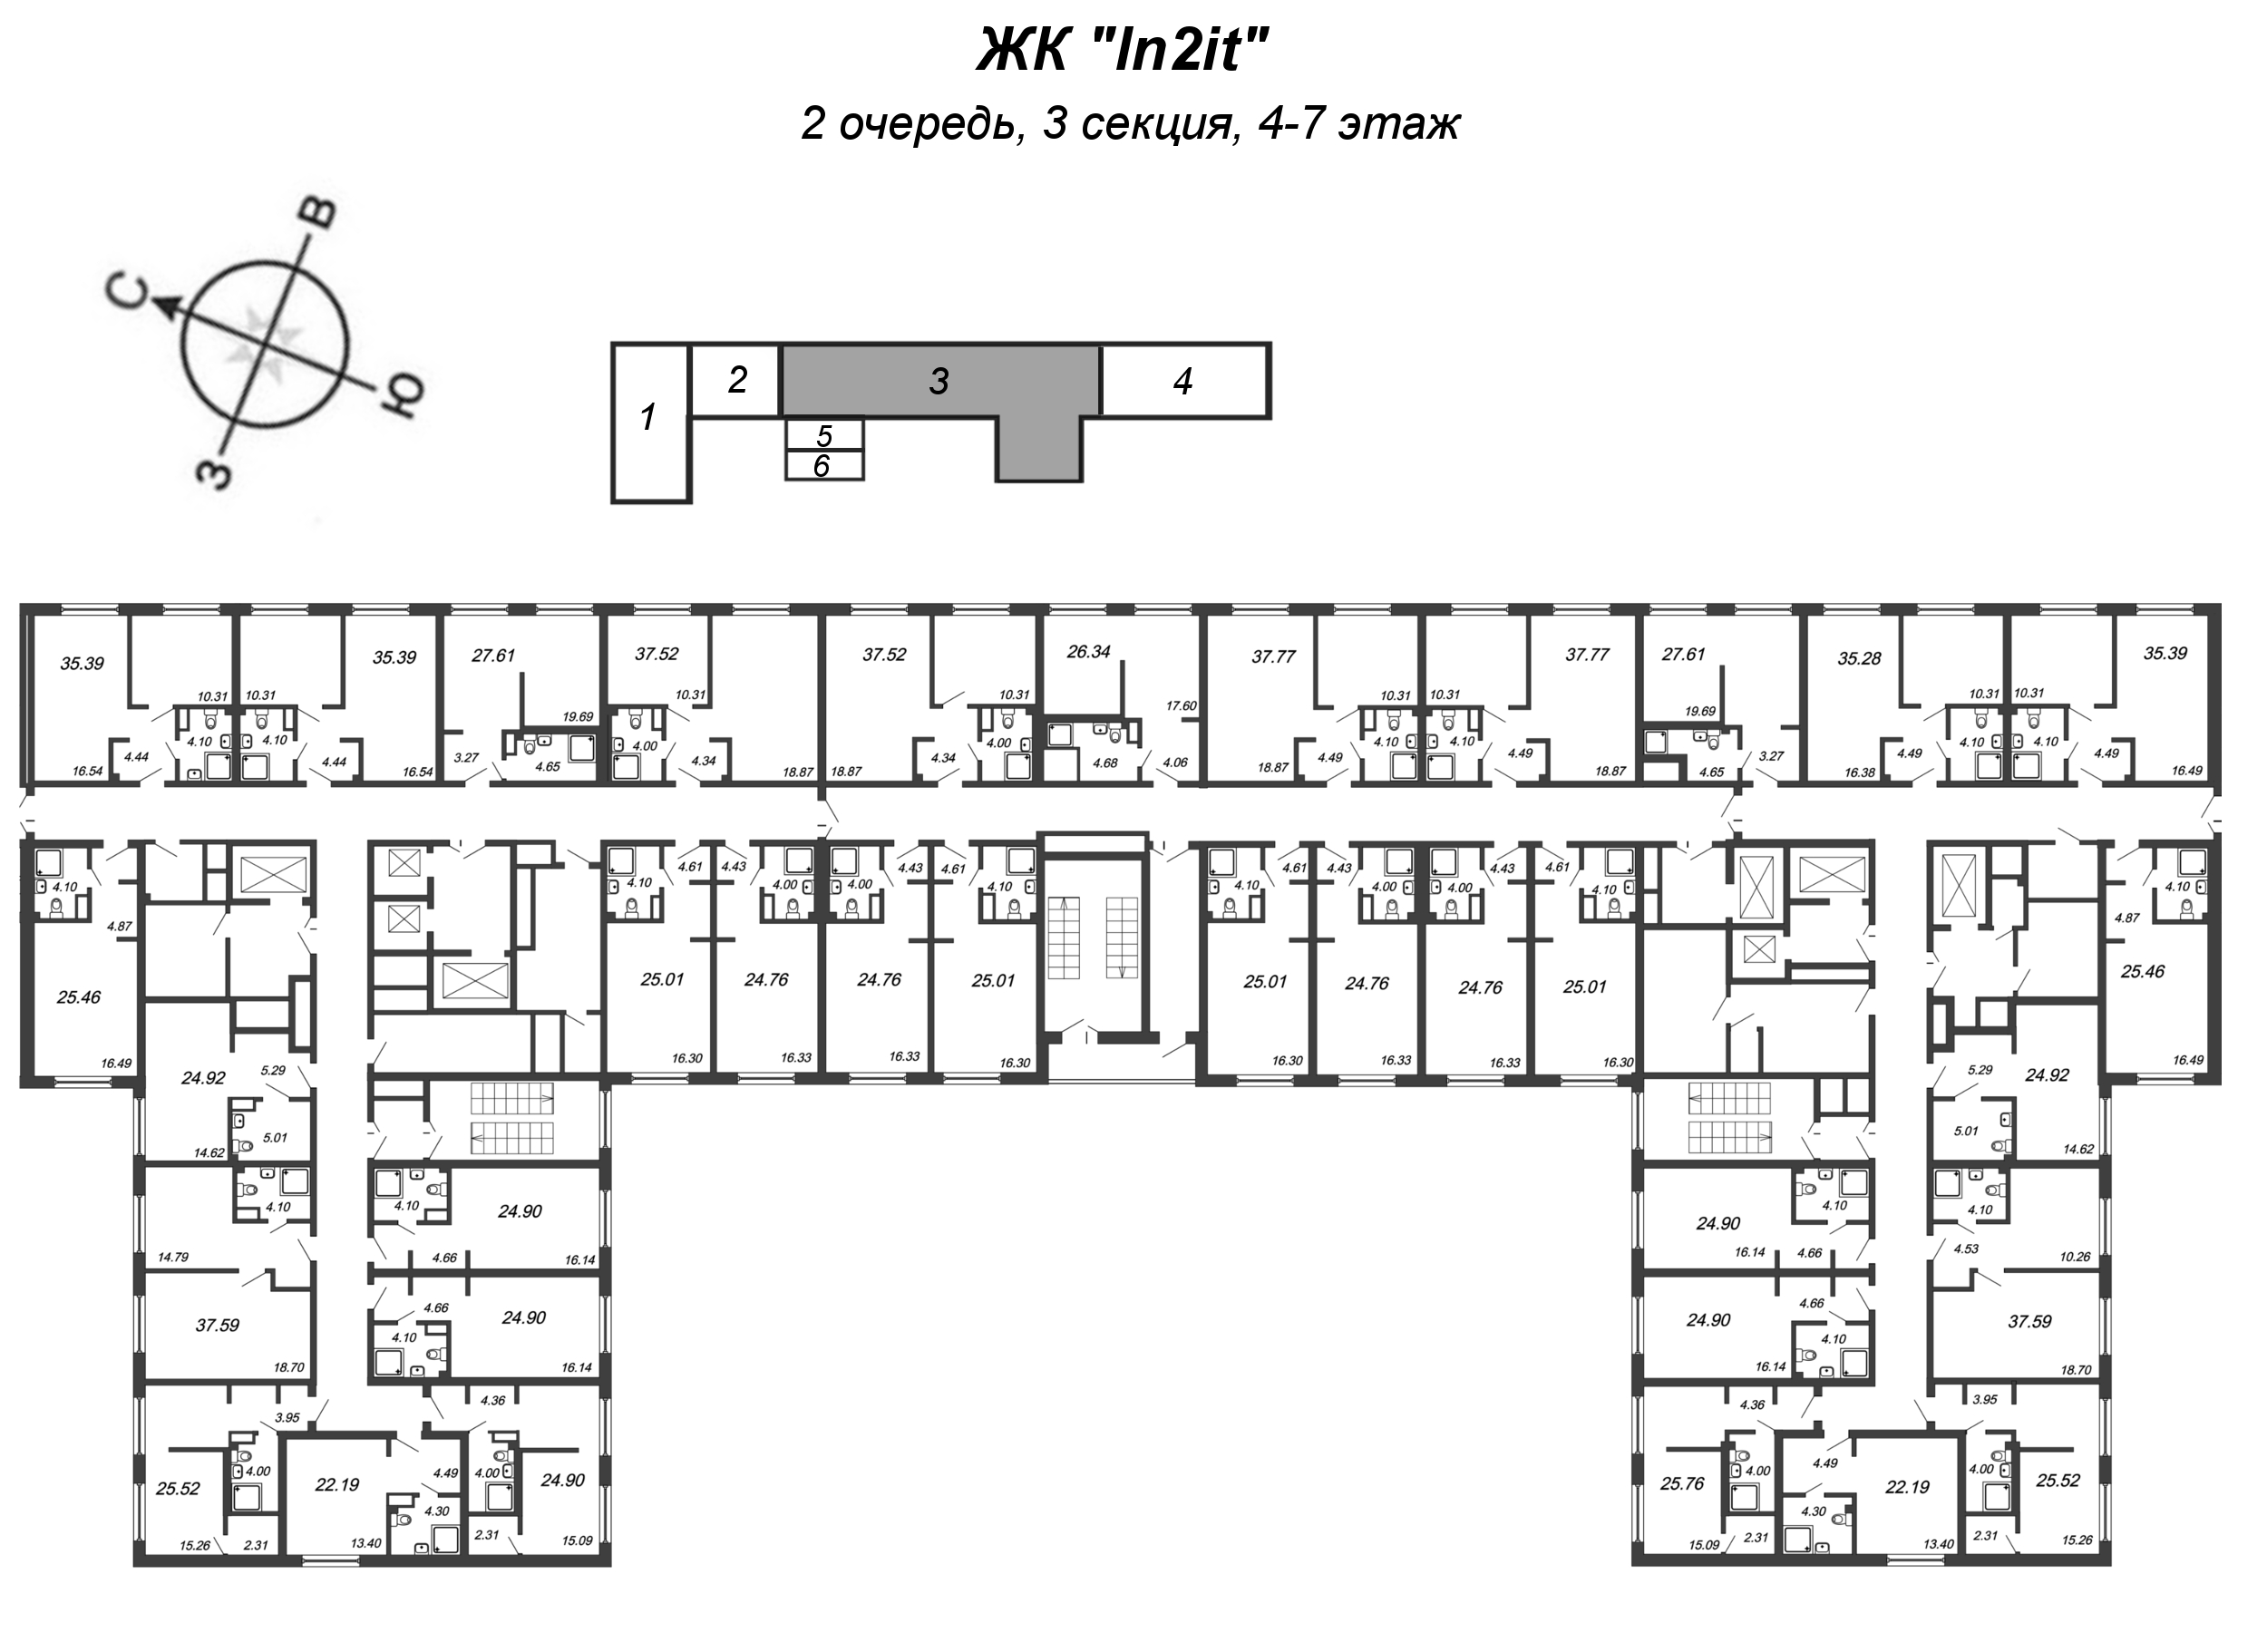 2-комнатная (Евро) квартира, 37.77 м² - планировка этажа